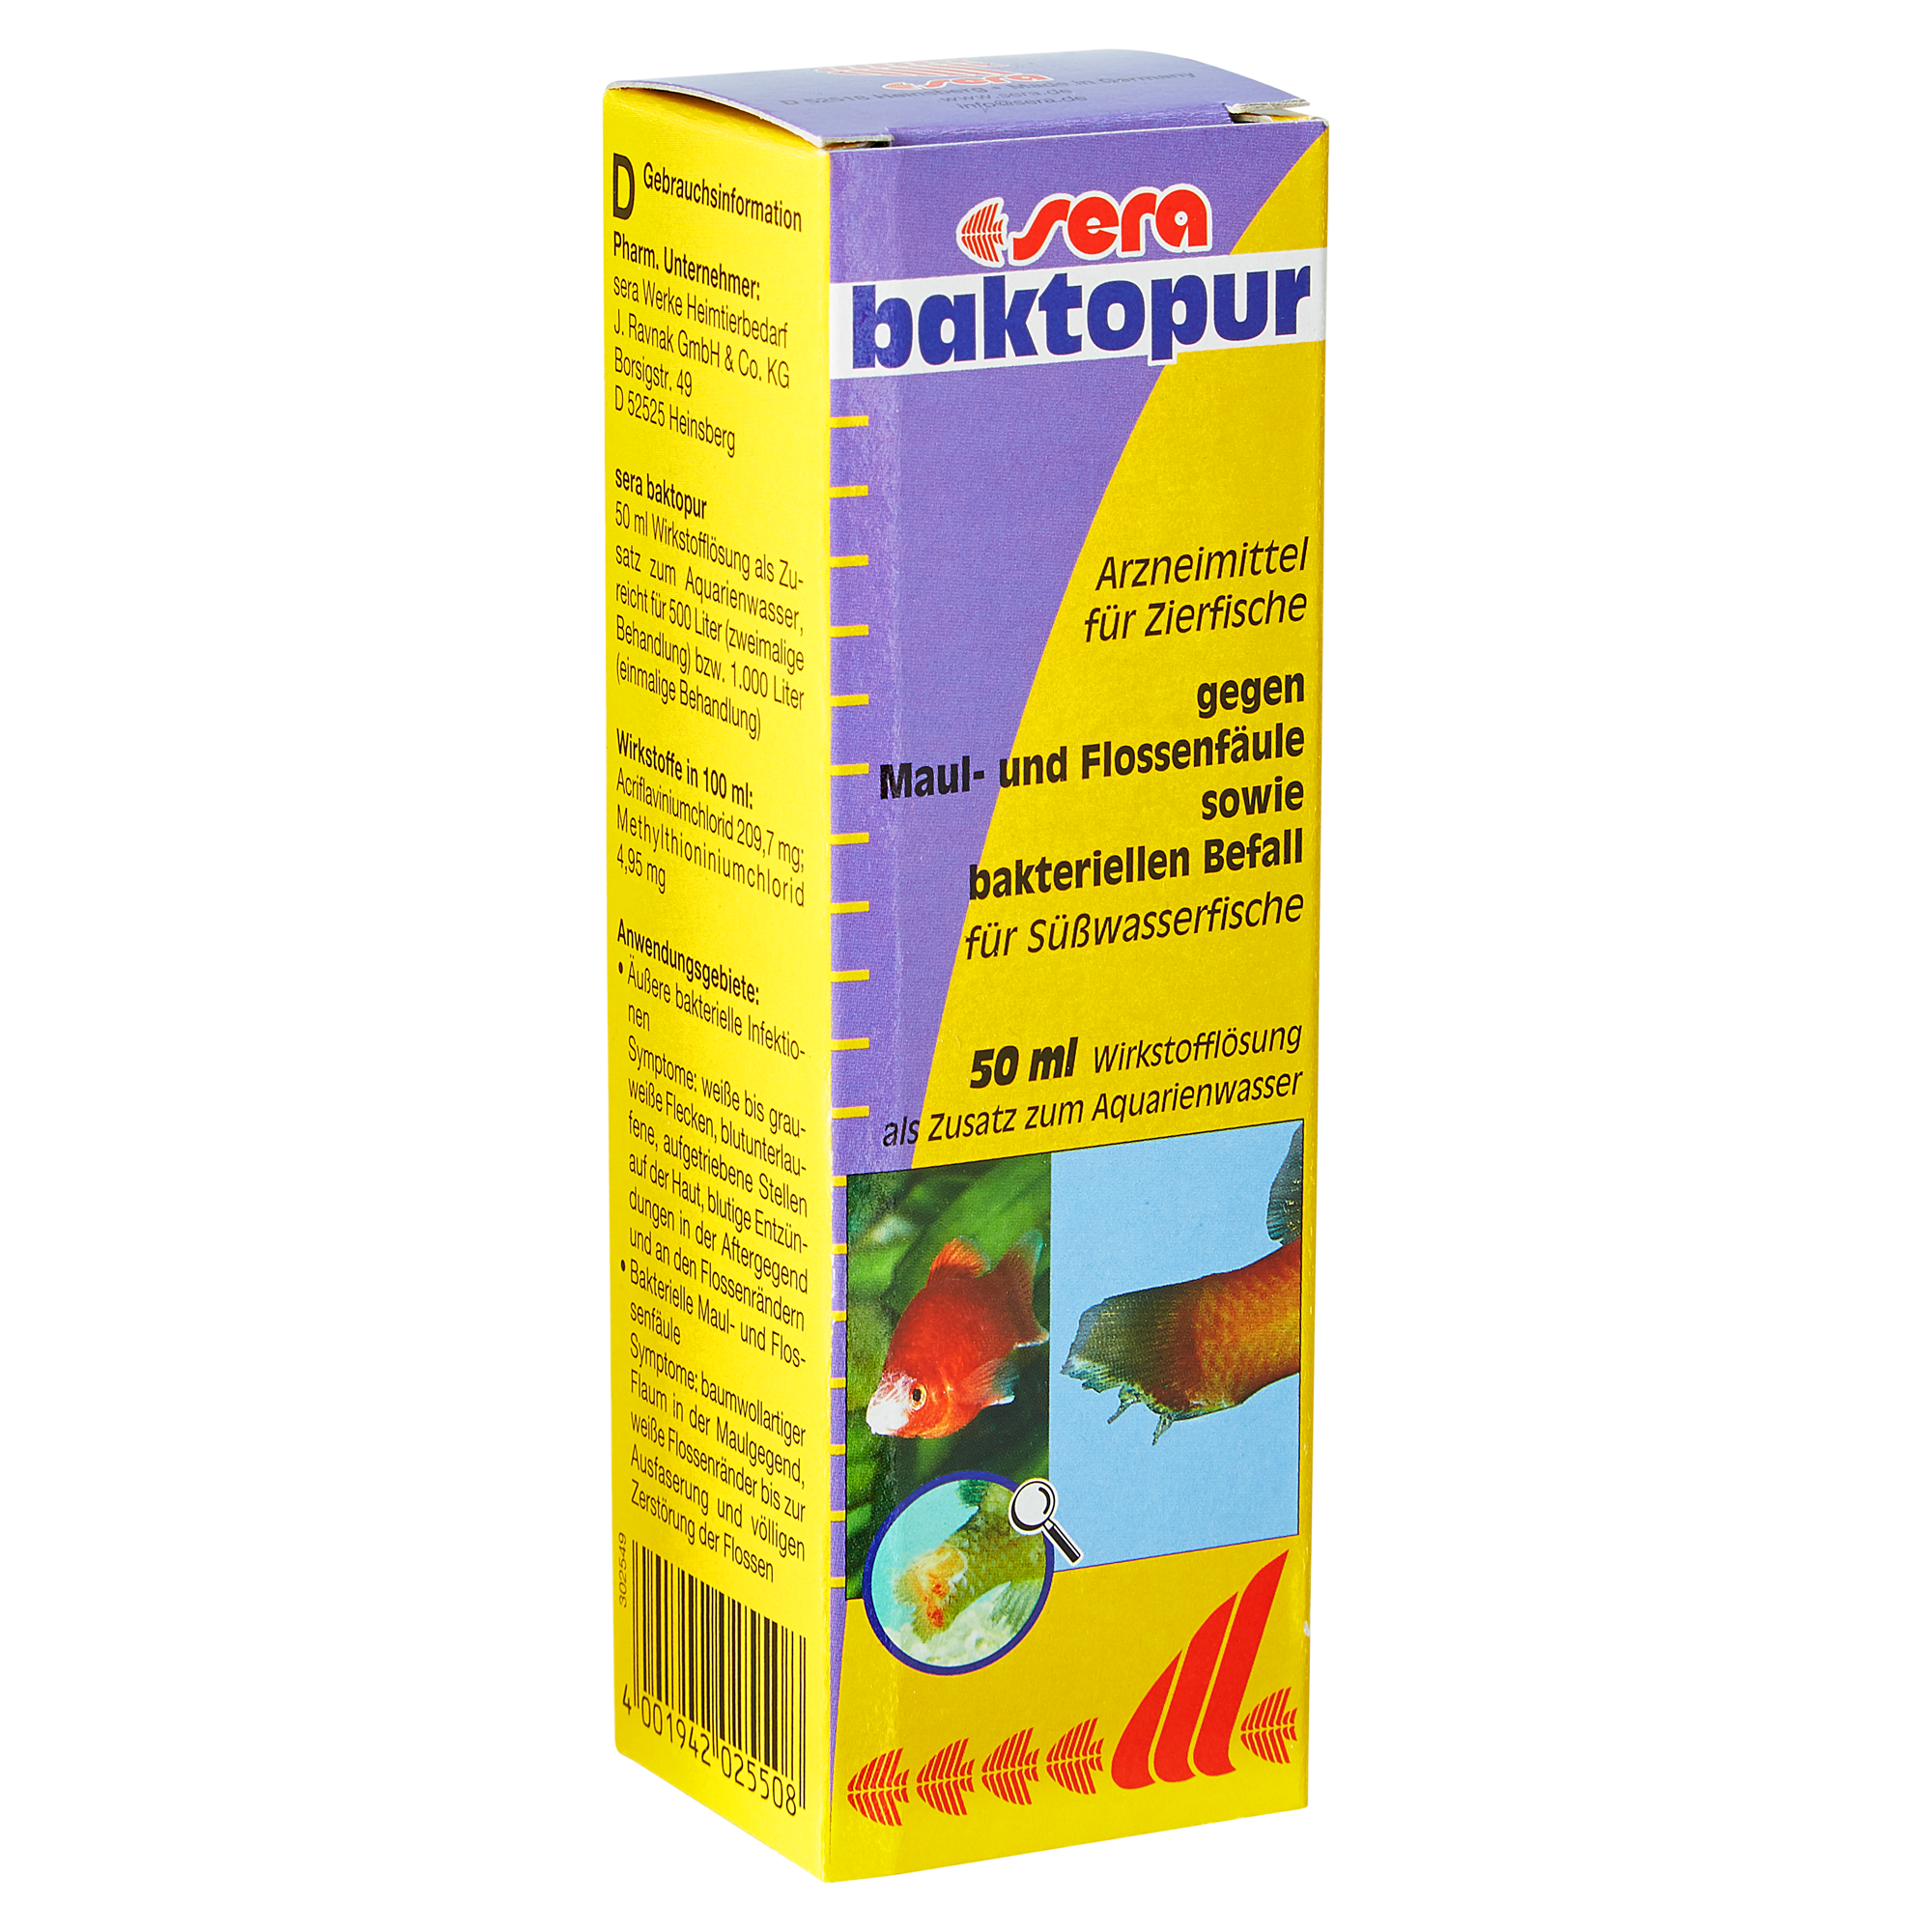 Fischarznei "baktopur" 50 ml + product picture